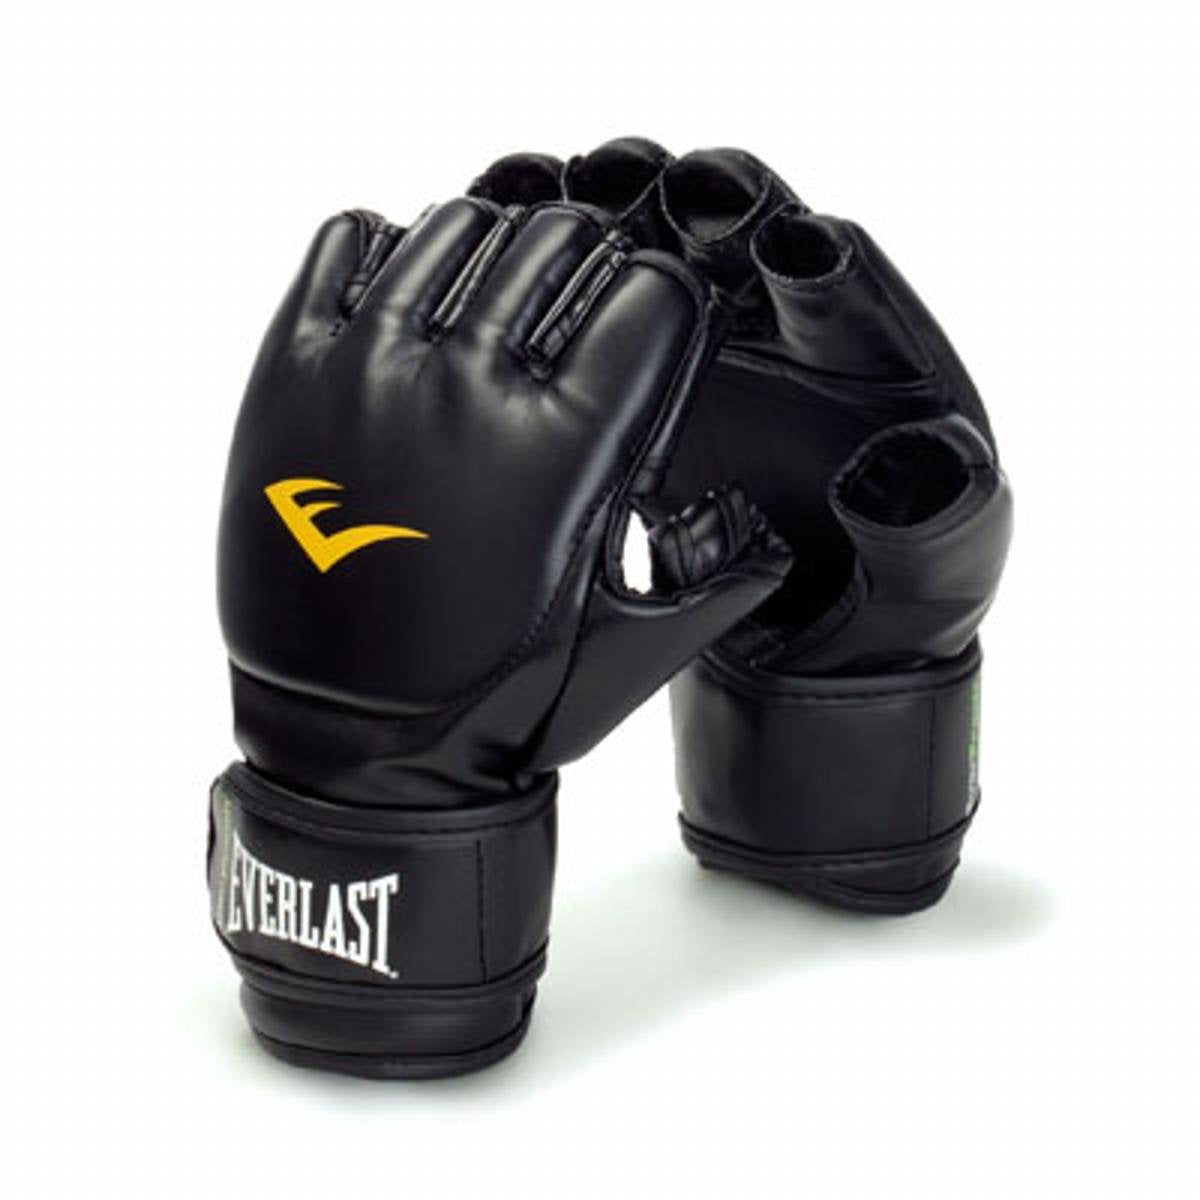 Everlast 7560 Grappling Gloves (Black) - Best Price online Prokicksports.com